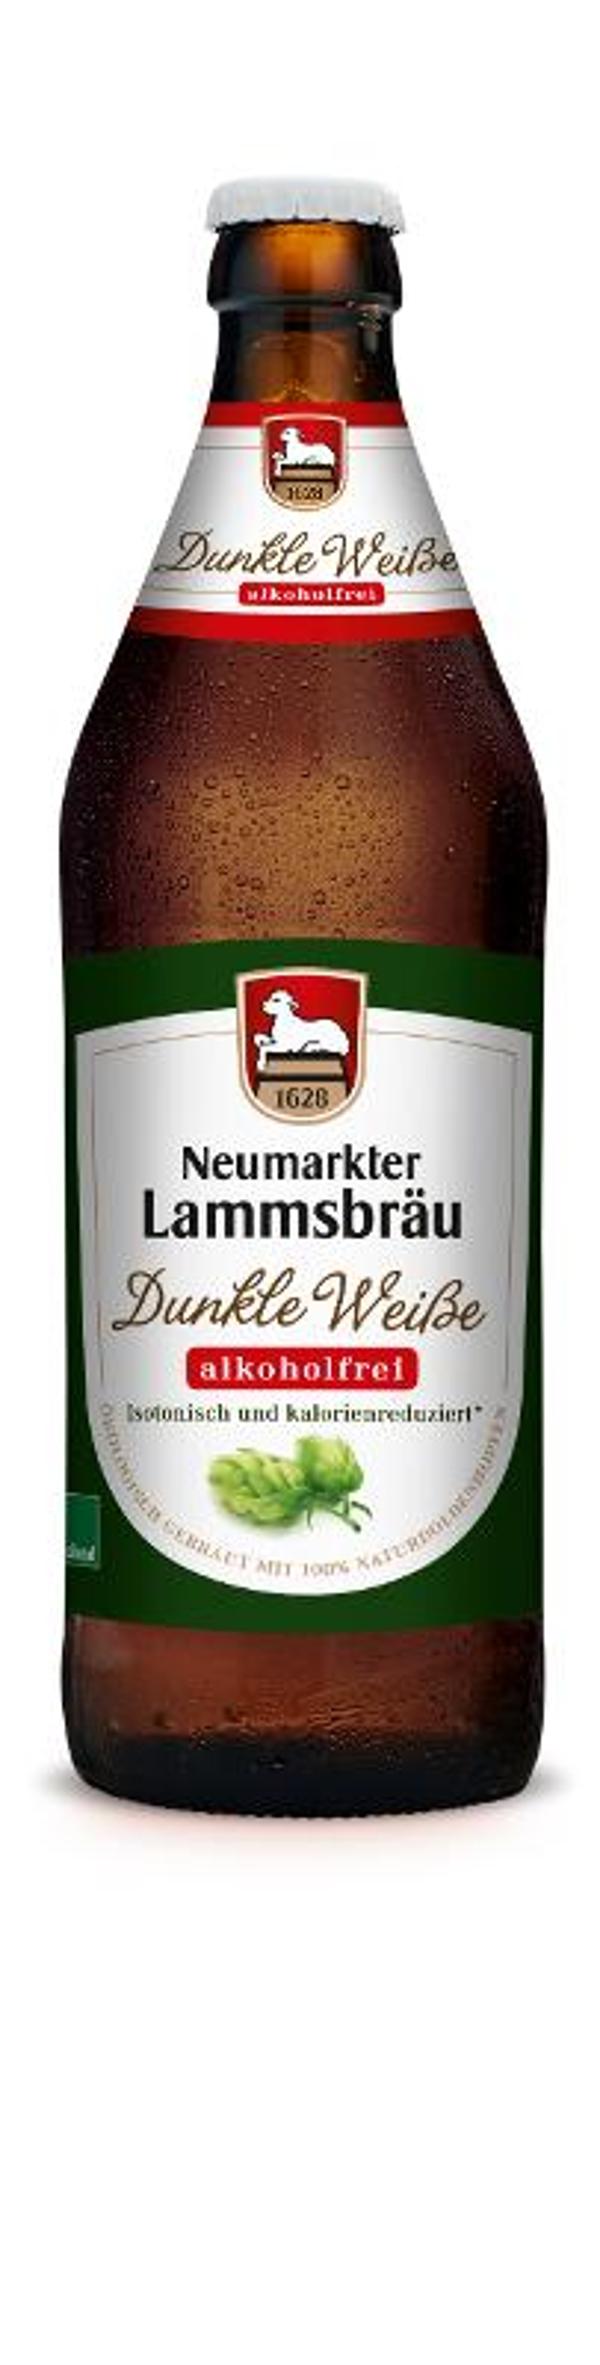 Produktfoto zu Dunkle Weiße alkoholfrei 0,5 l Neumarkter Lammsbräu